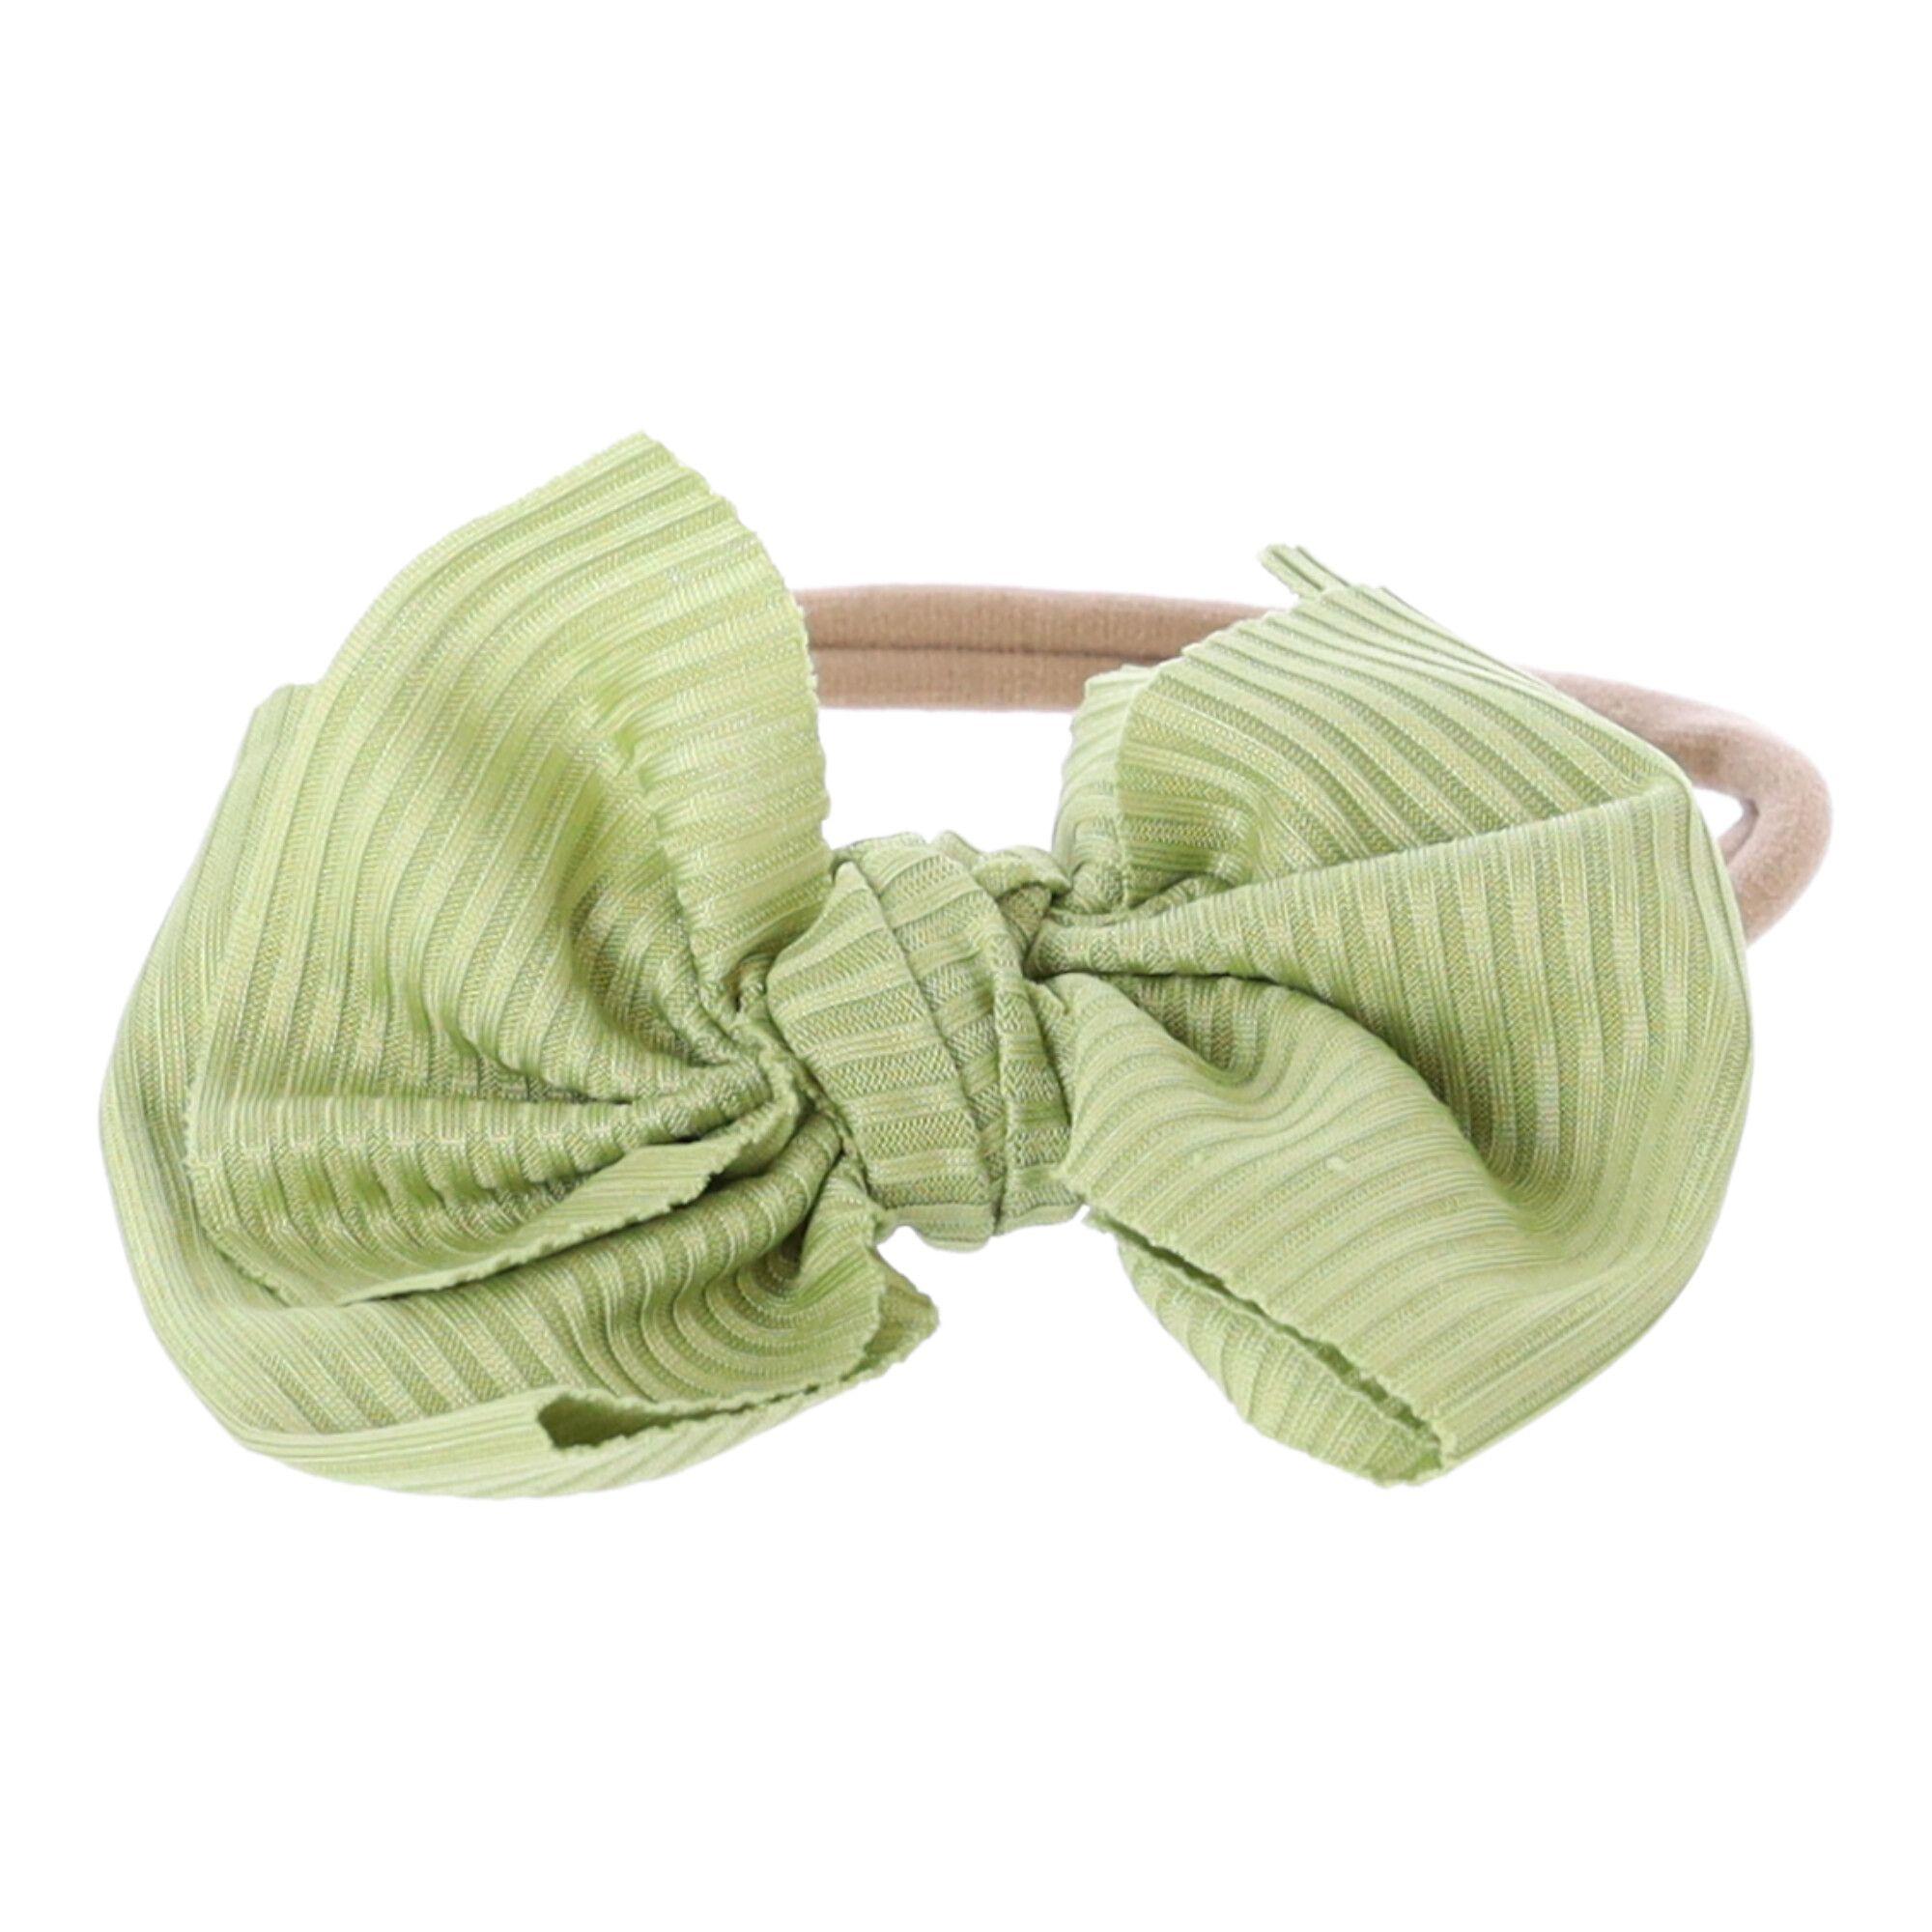 Baby headband with a bow - green